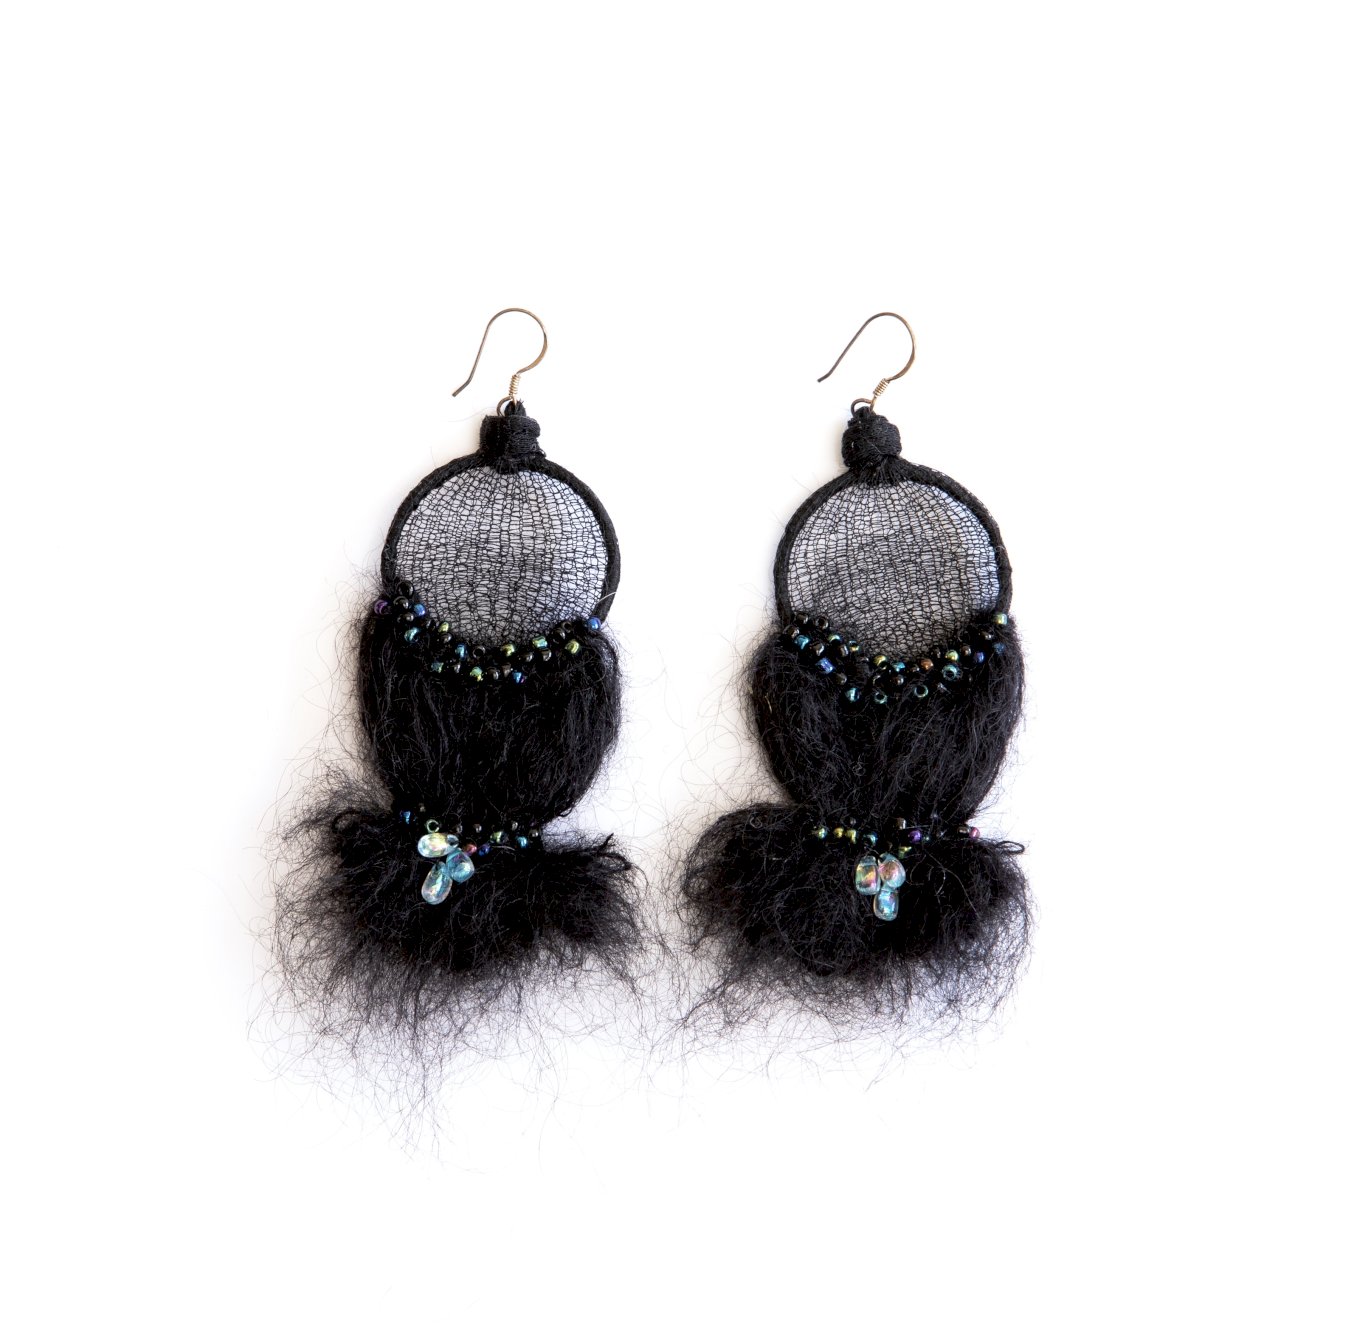 Earrings made of silver hooks, cotton net, mohair and Miyuki glass beads